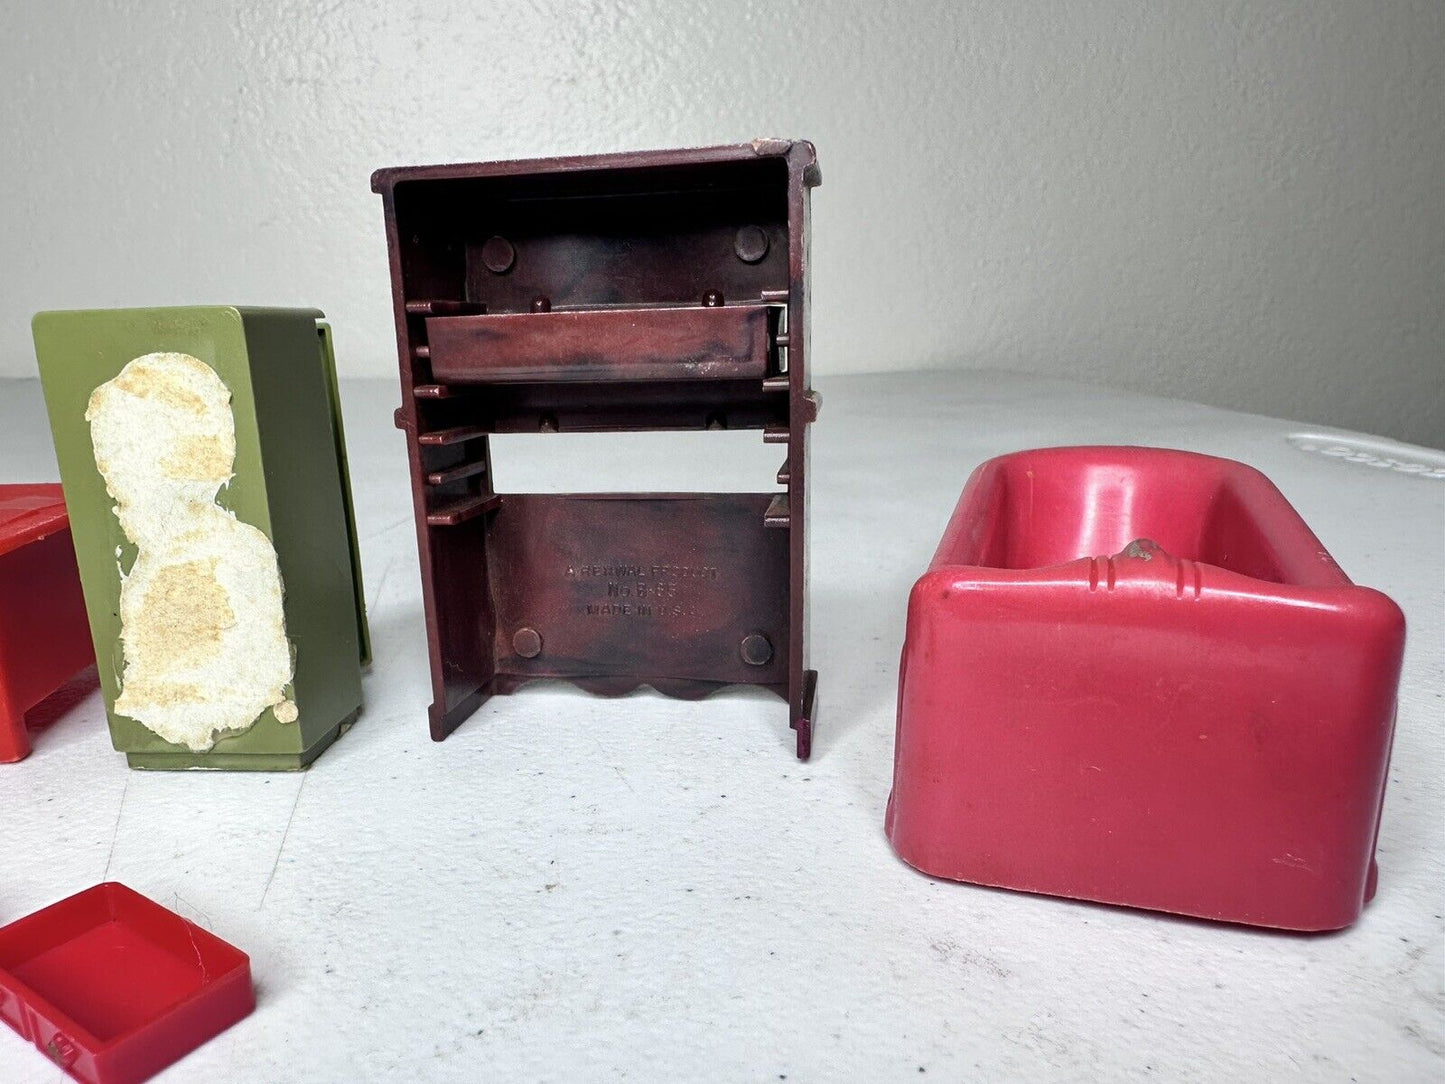 Vintage Dollhouse Furniture Lot - Unique Miniature Chair, Fridge, Drawers, and Bathtub Set - Perfect for Parts or Restoration Projects - TreasuTiques